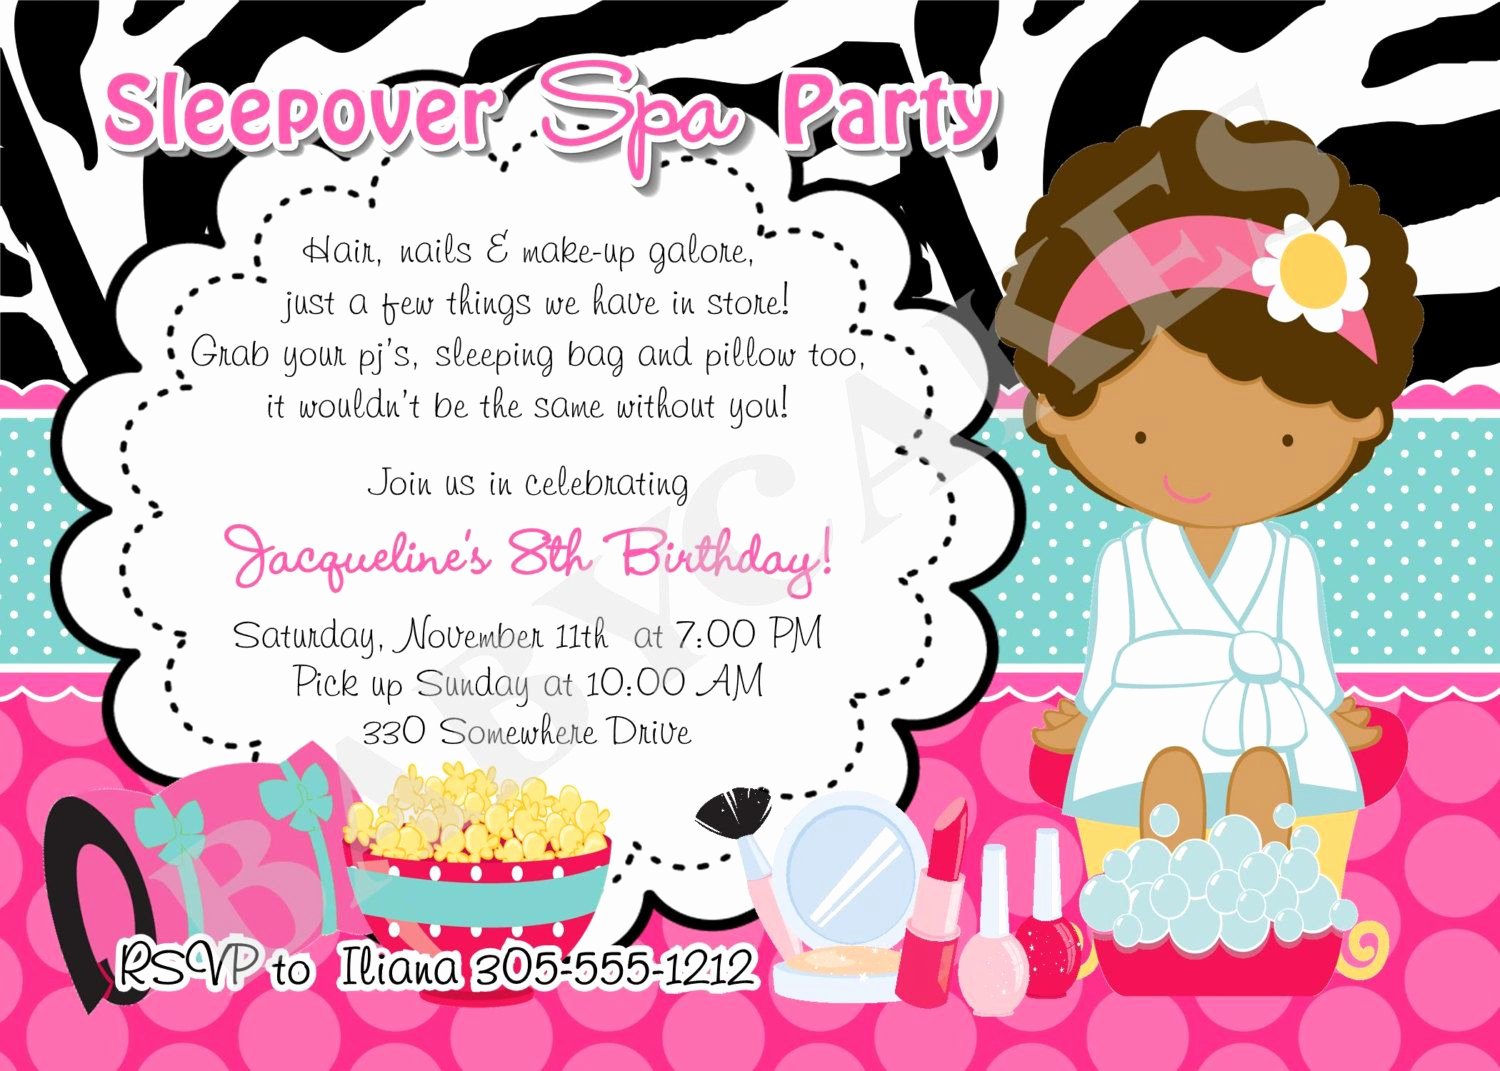 Spa Party Invitation Template Beautiful Spa Sleepover Birthday Invitation Invite Sleepover Spa